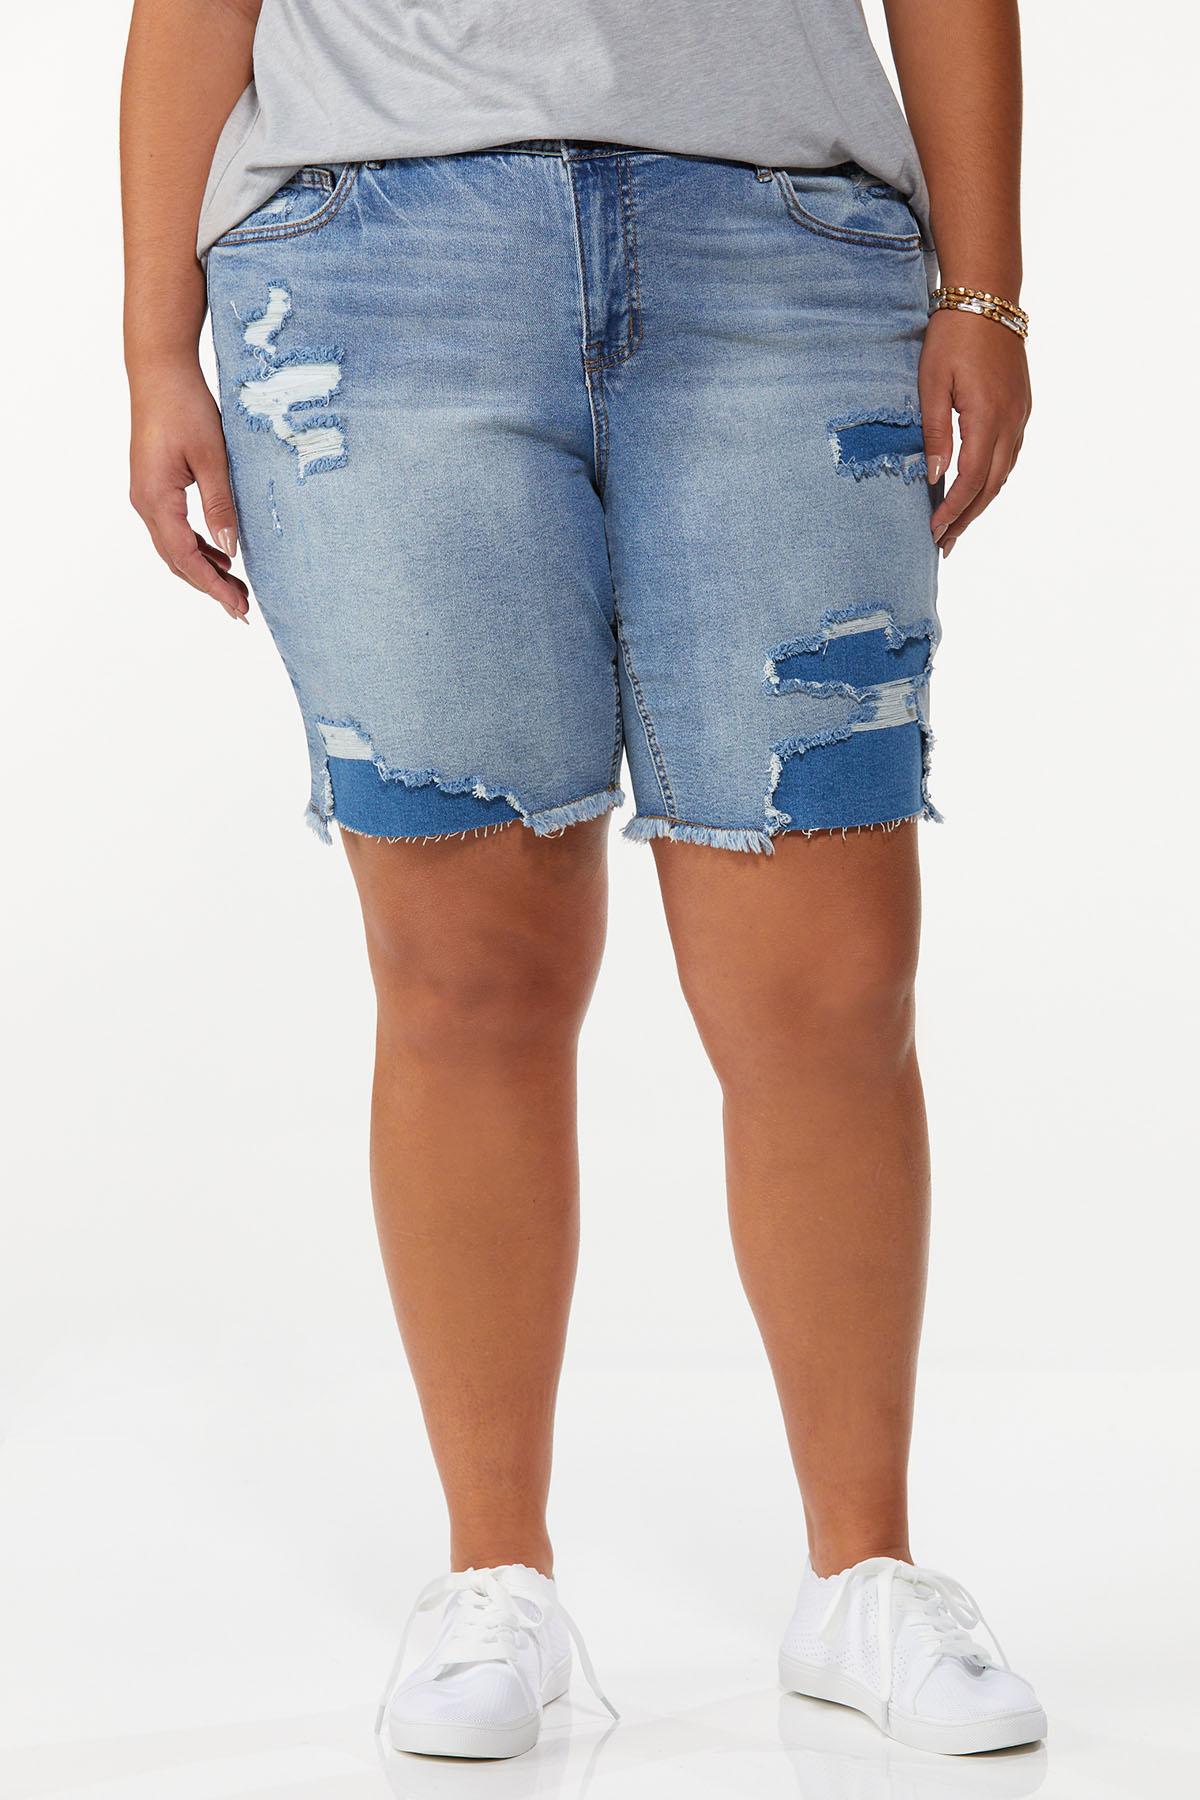 Plus Size Distressed Jean Shorts